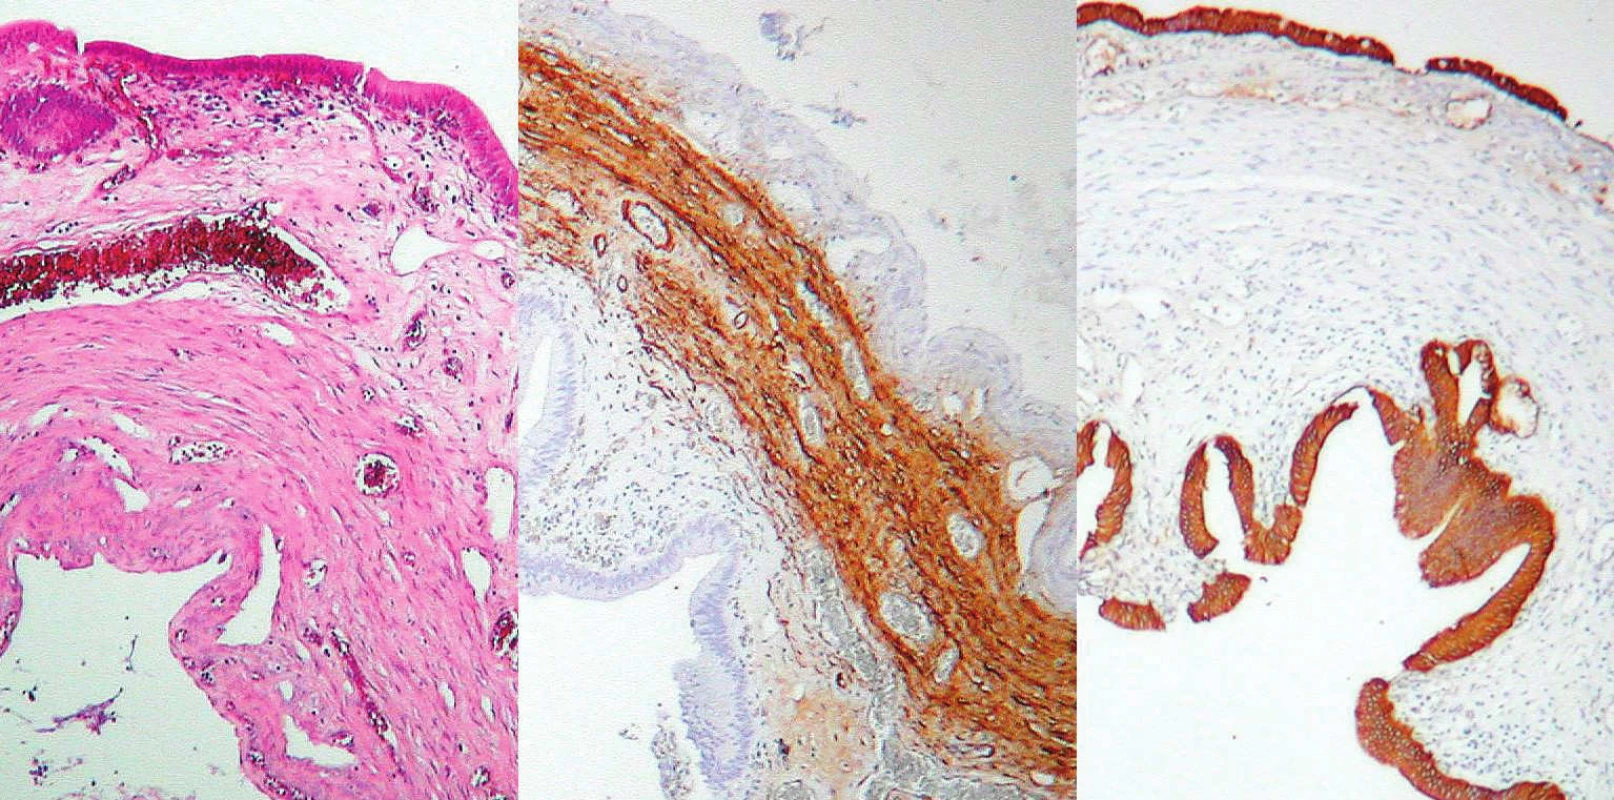 Histologický nález – multicysta, vľavo normálne farbenie, v strede zhrubnutá svalovina, vpravo epitel
Fig. 8. Histological preparation – multicyst: normal staining on the left, thick muscle layer in the middle, epithelium on the
right